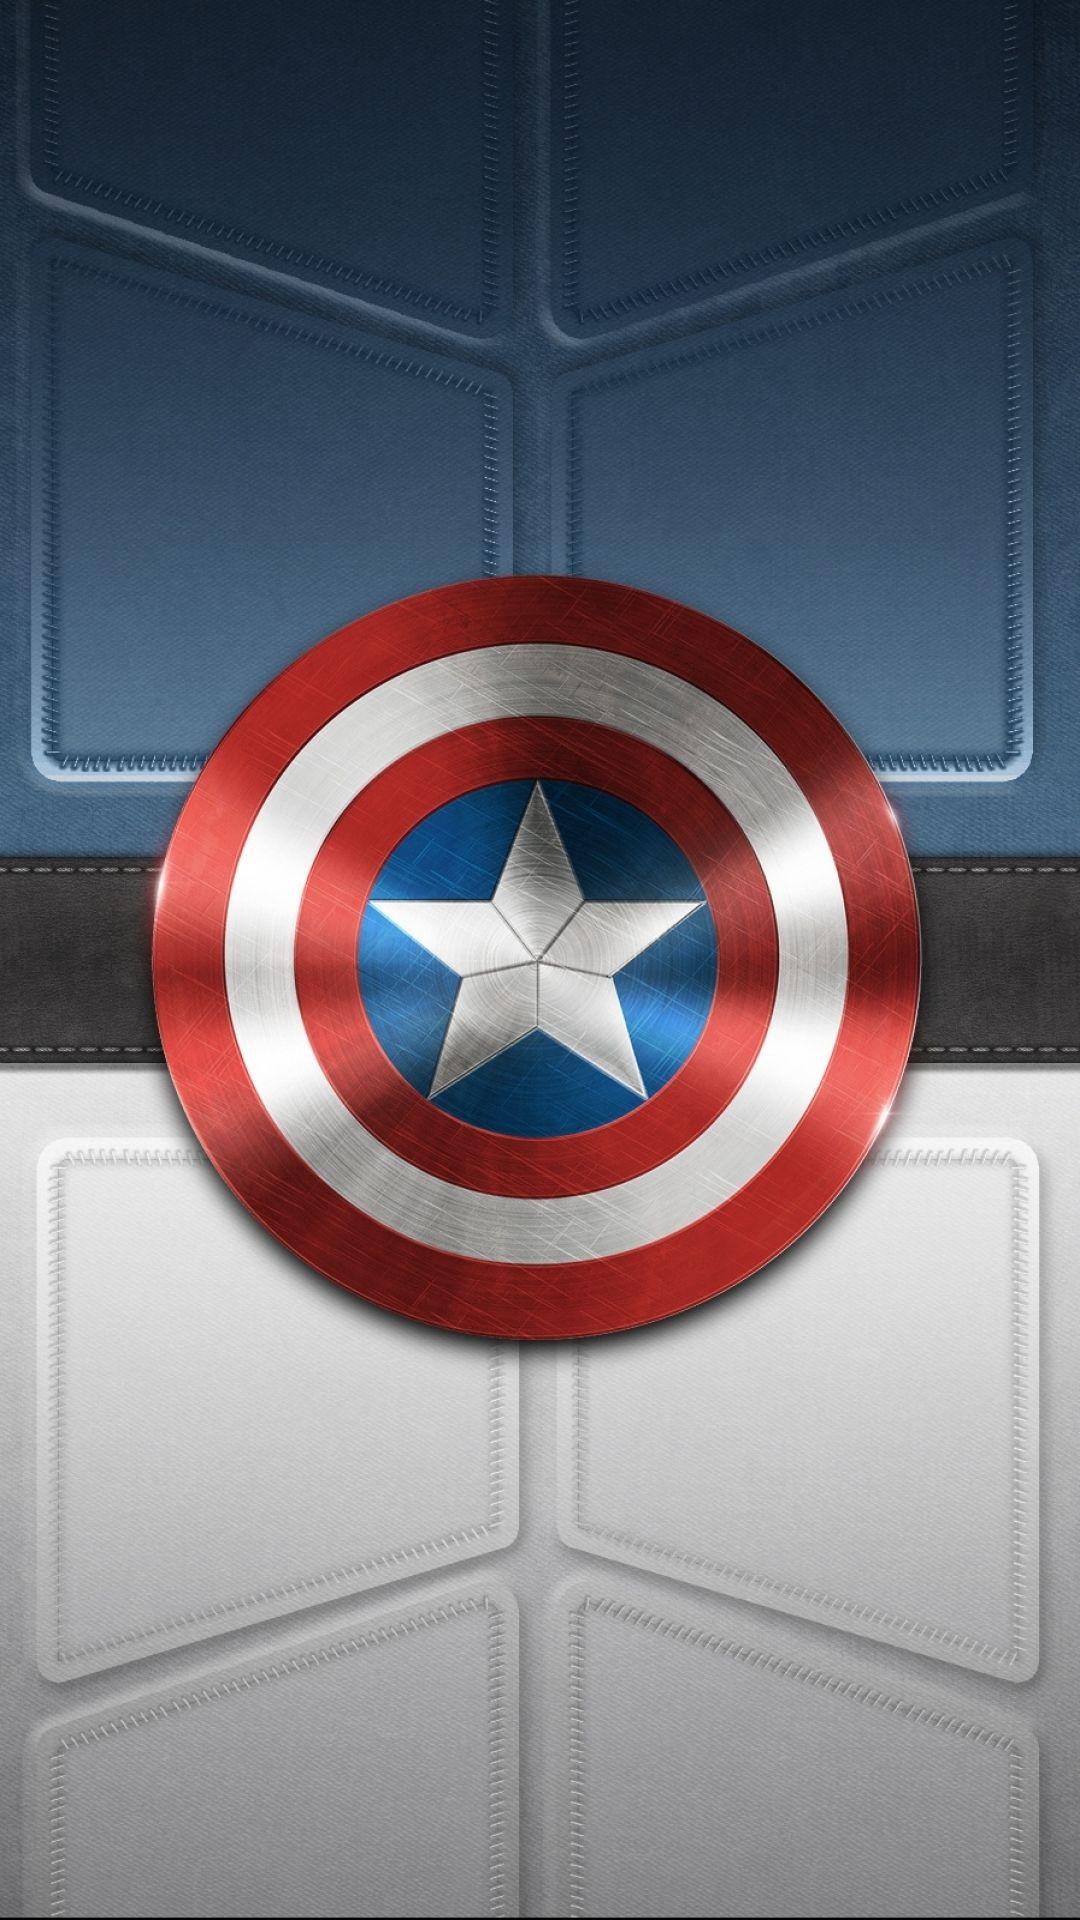 Captain America iPhone Wallpaper Free Captain America